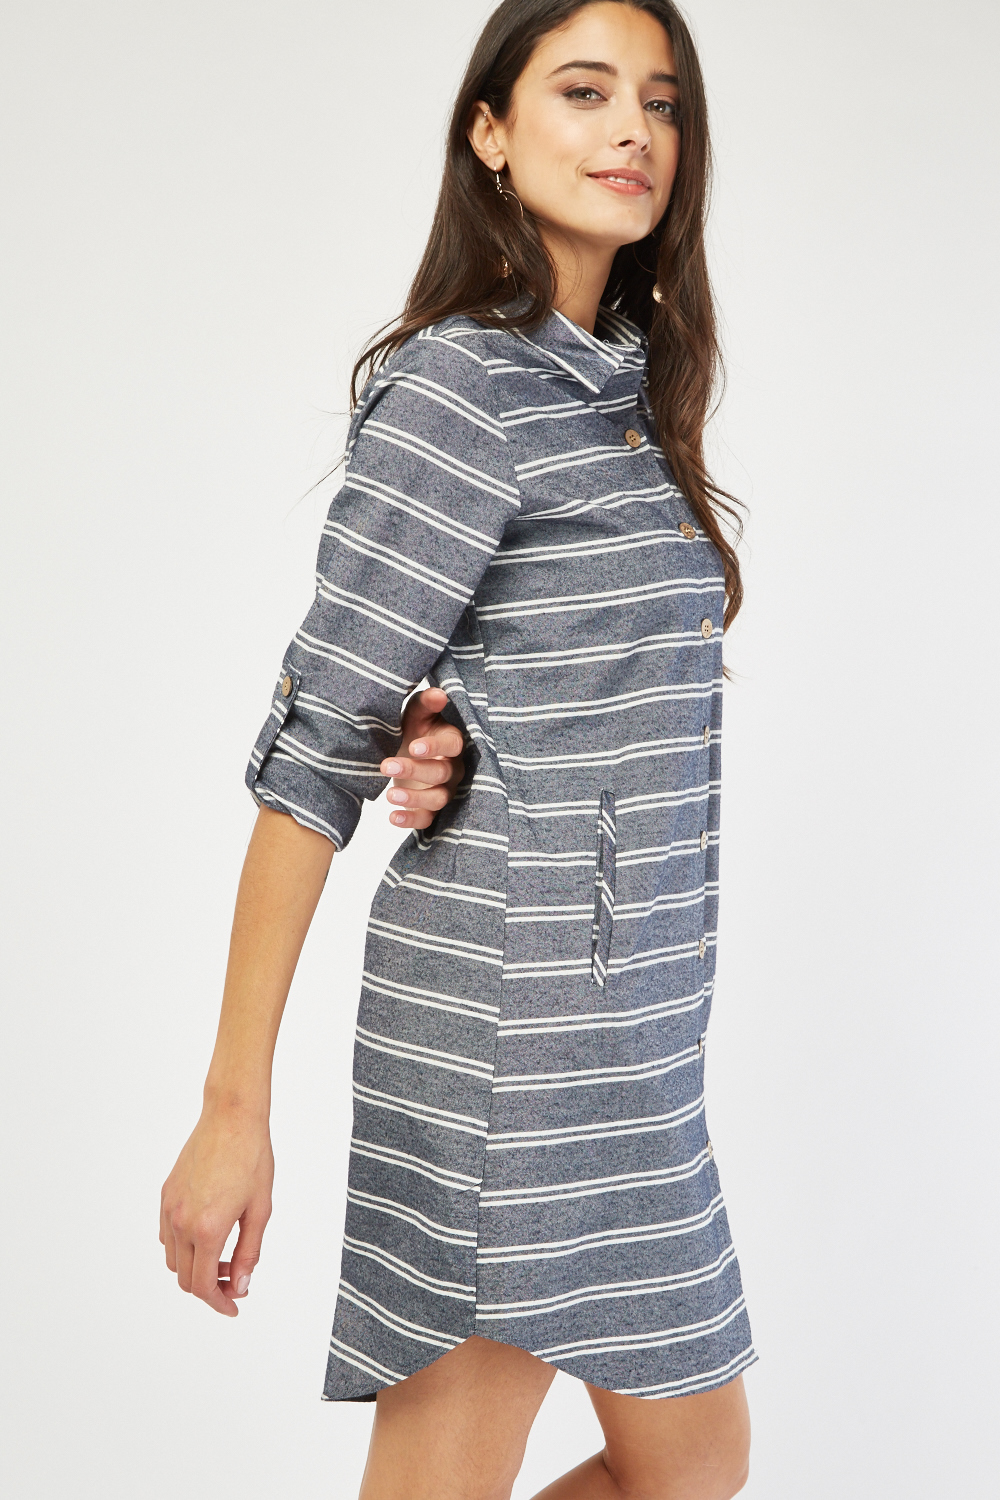 Stripe Shirt Dress - Just $7